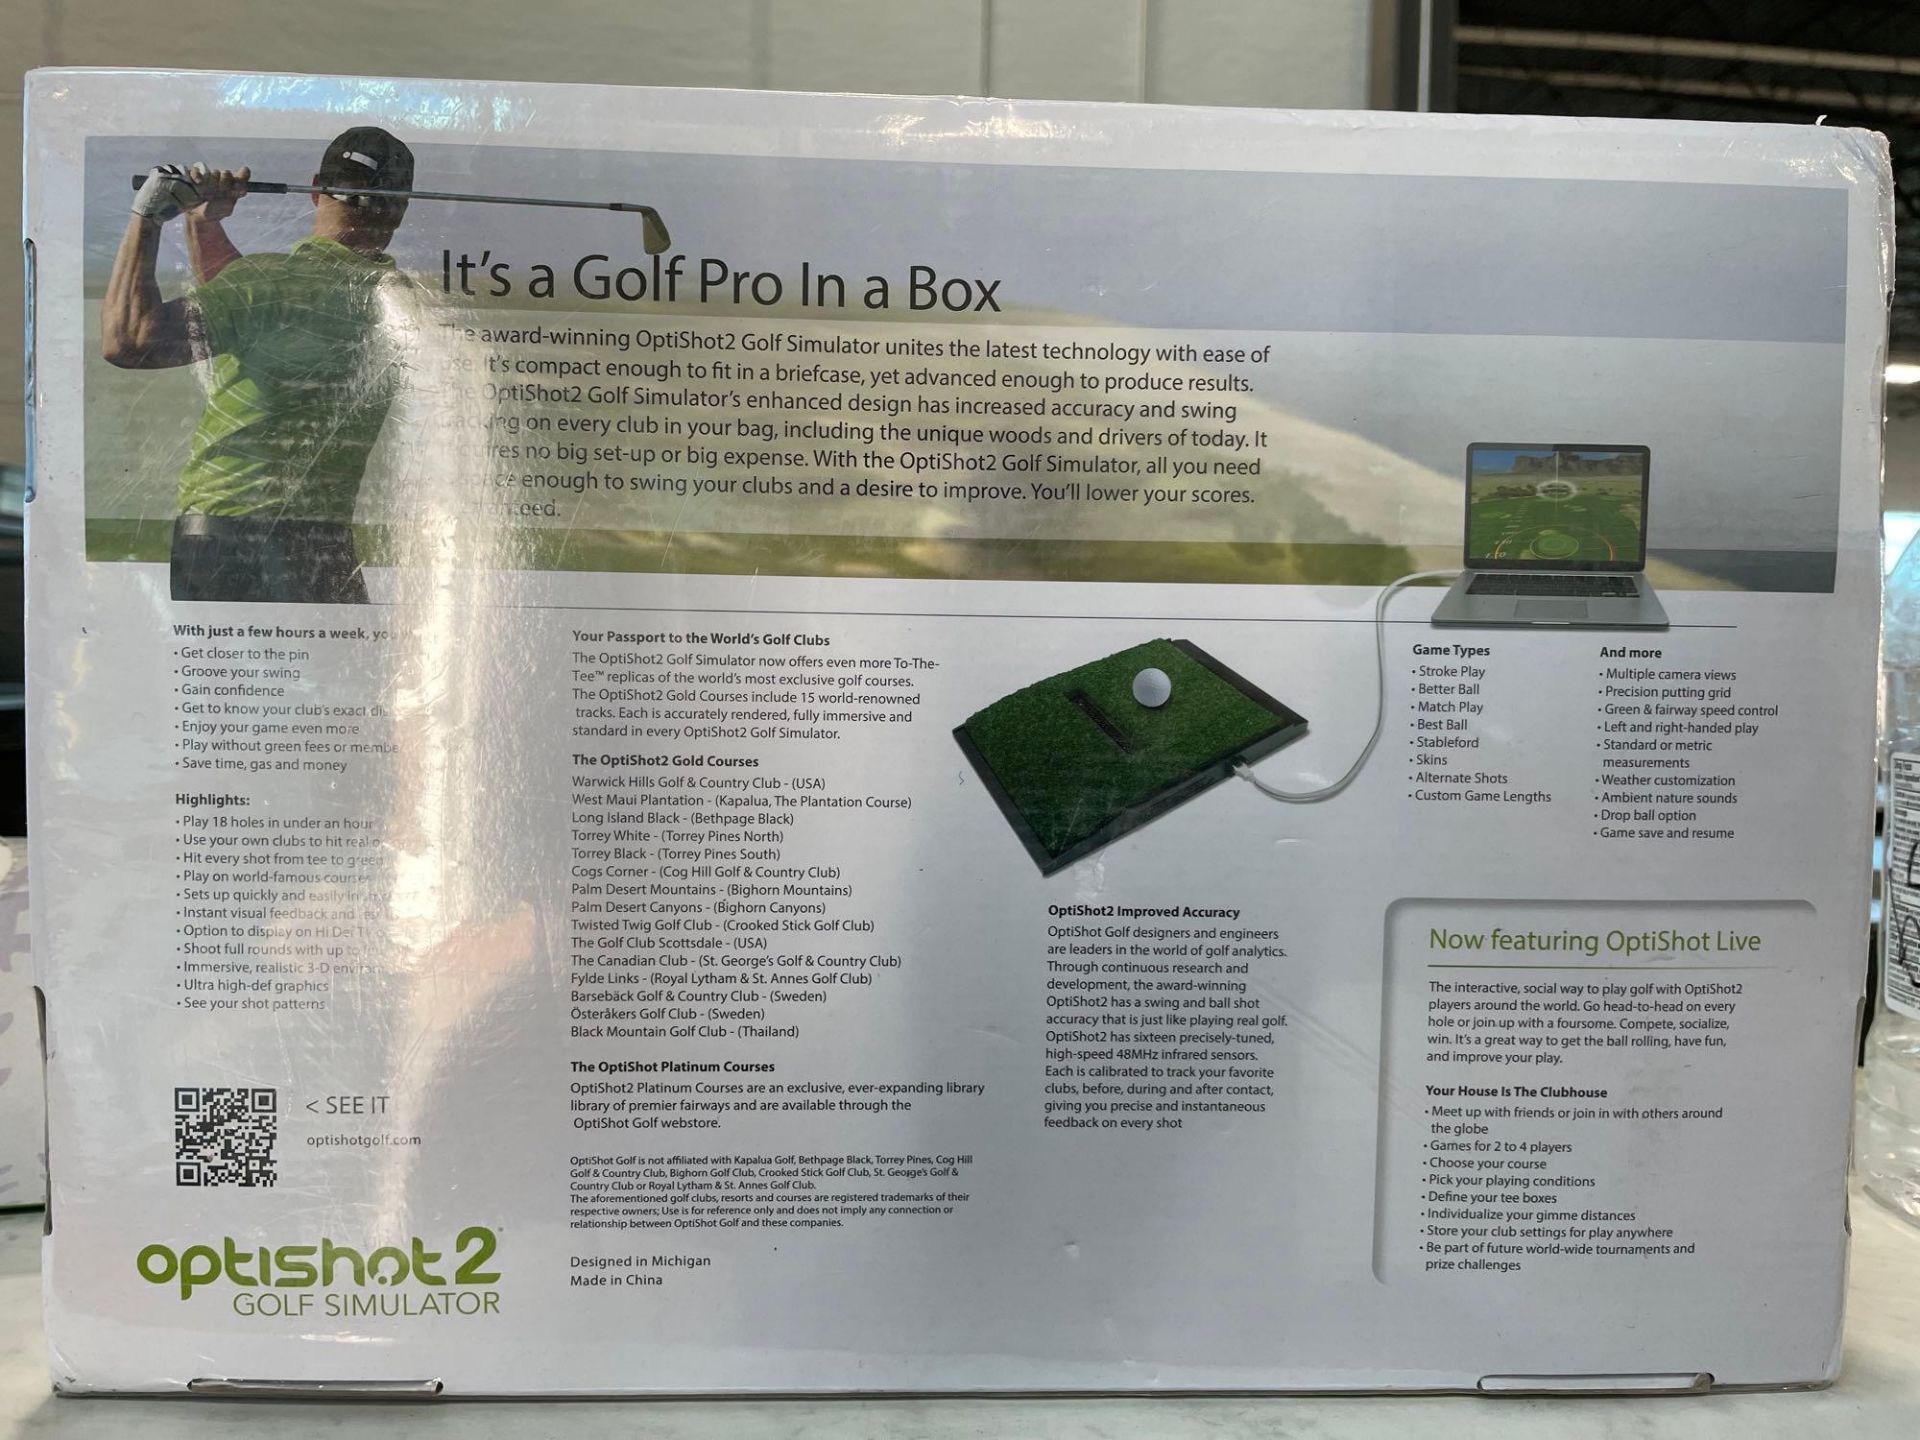 Optishot 2 Golf Simulator - Image 2 of 4